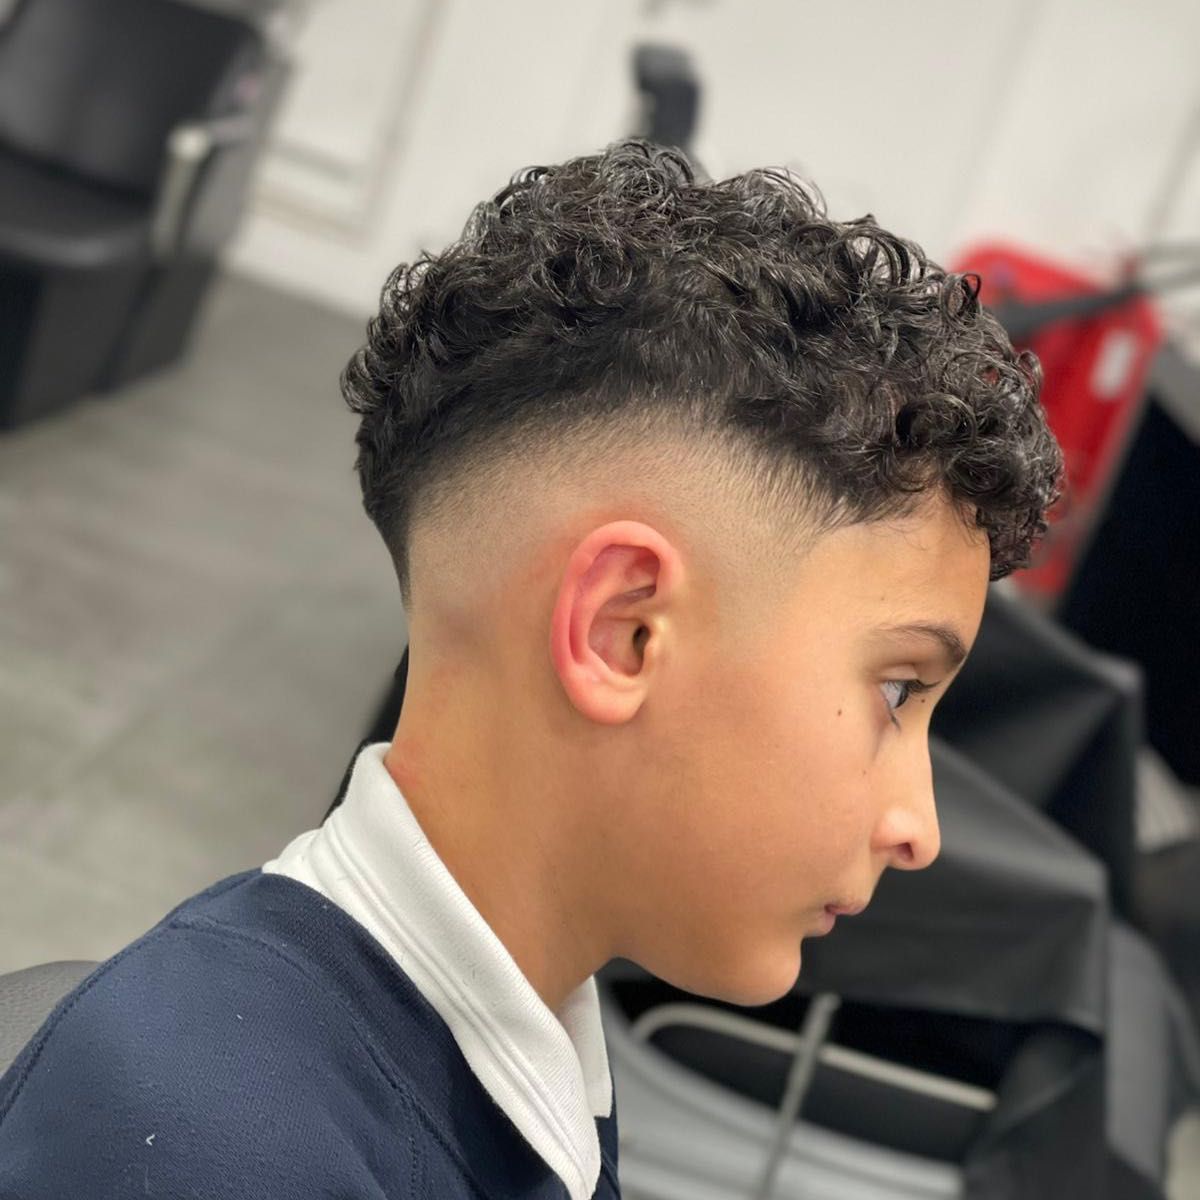 Kids Haircut (Under 12) portfolio